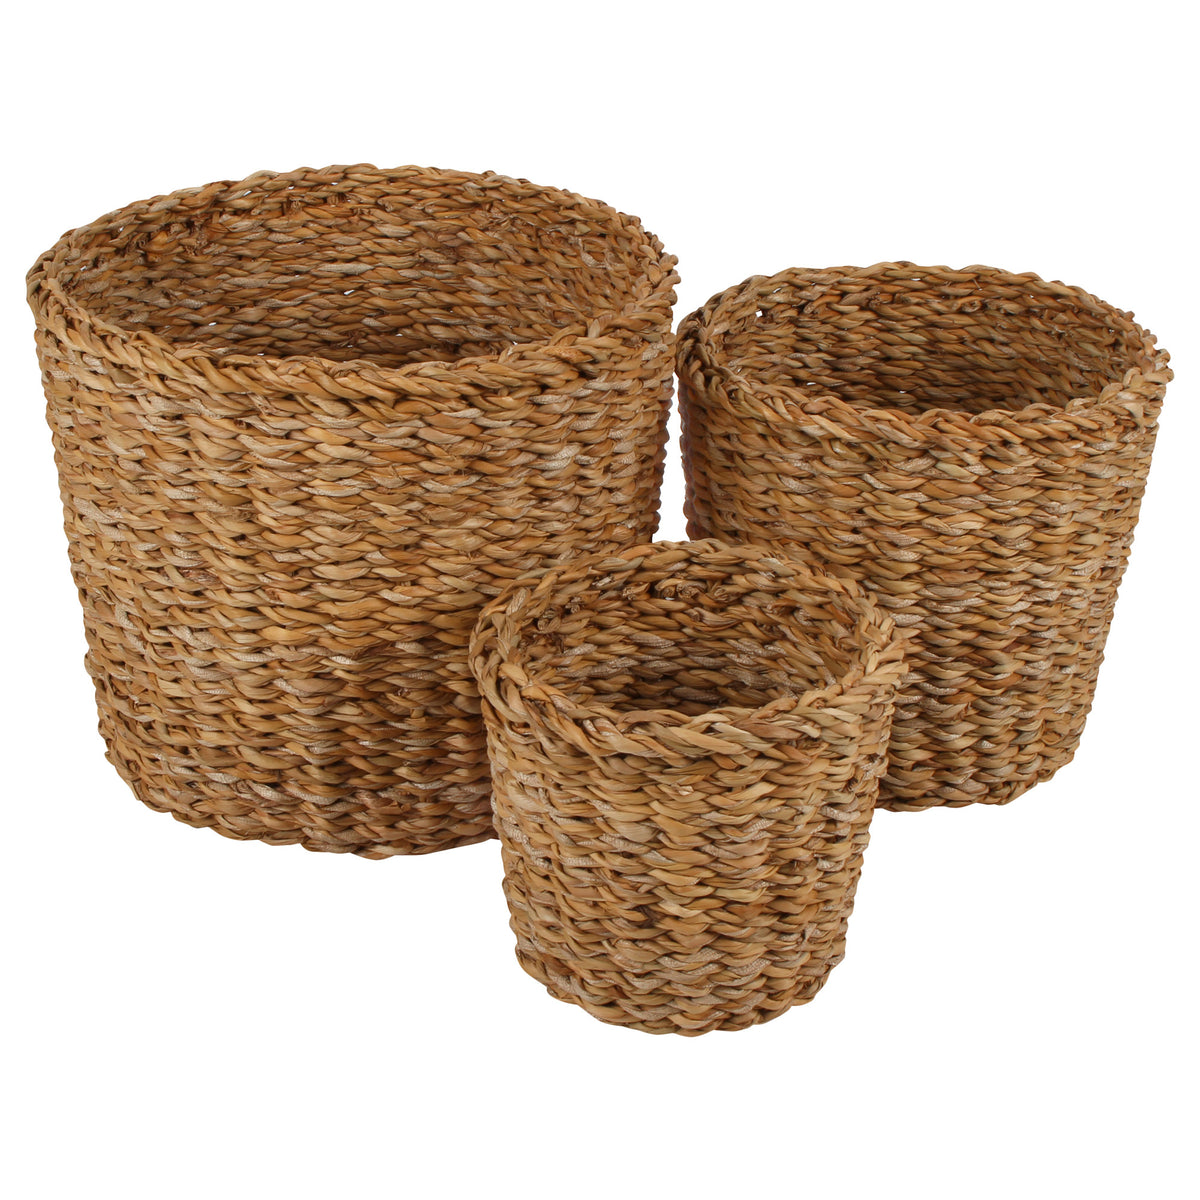 Baskets | Manjimup Homemakers